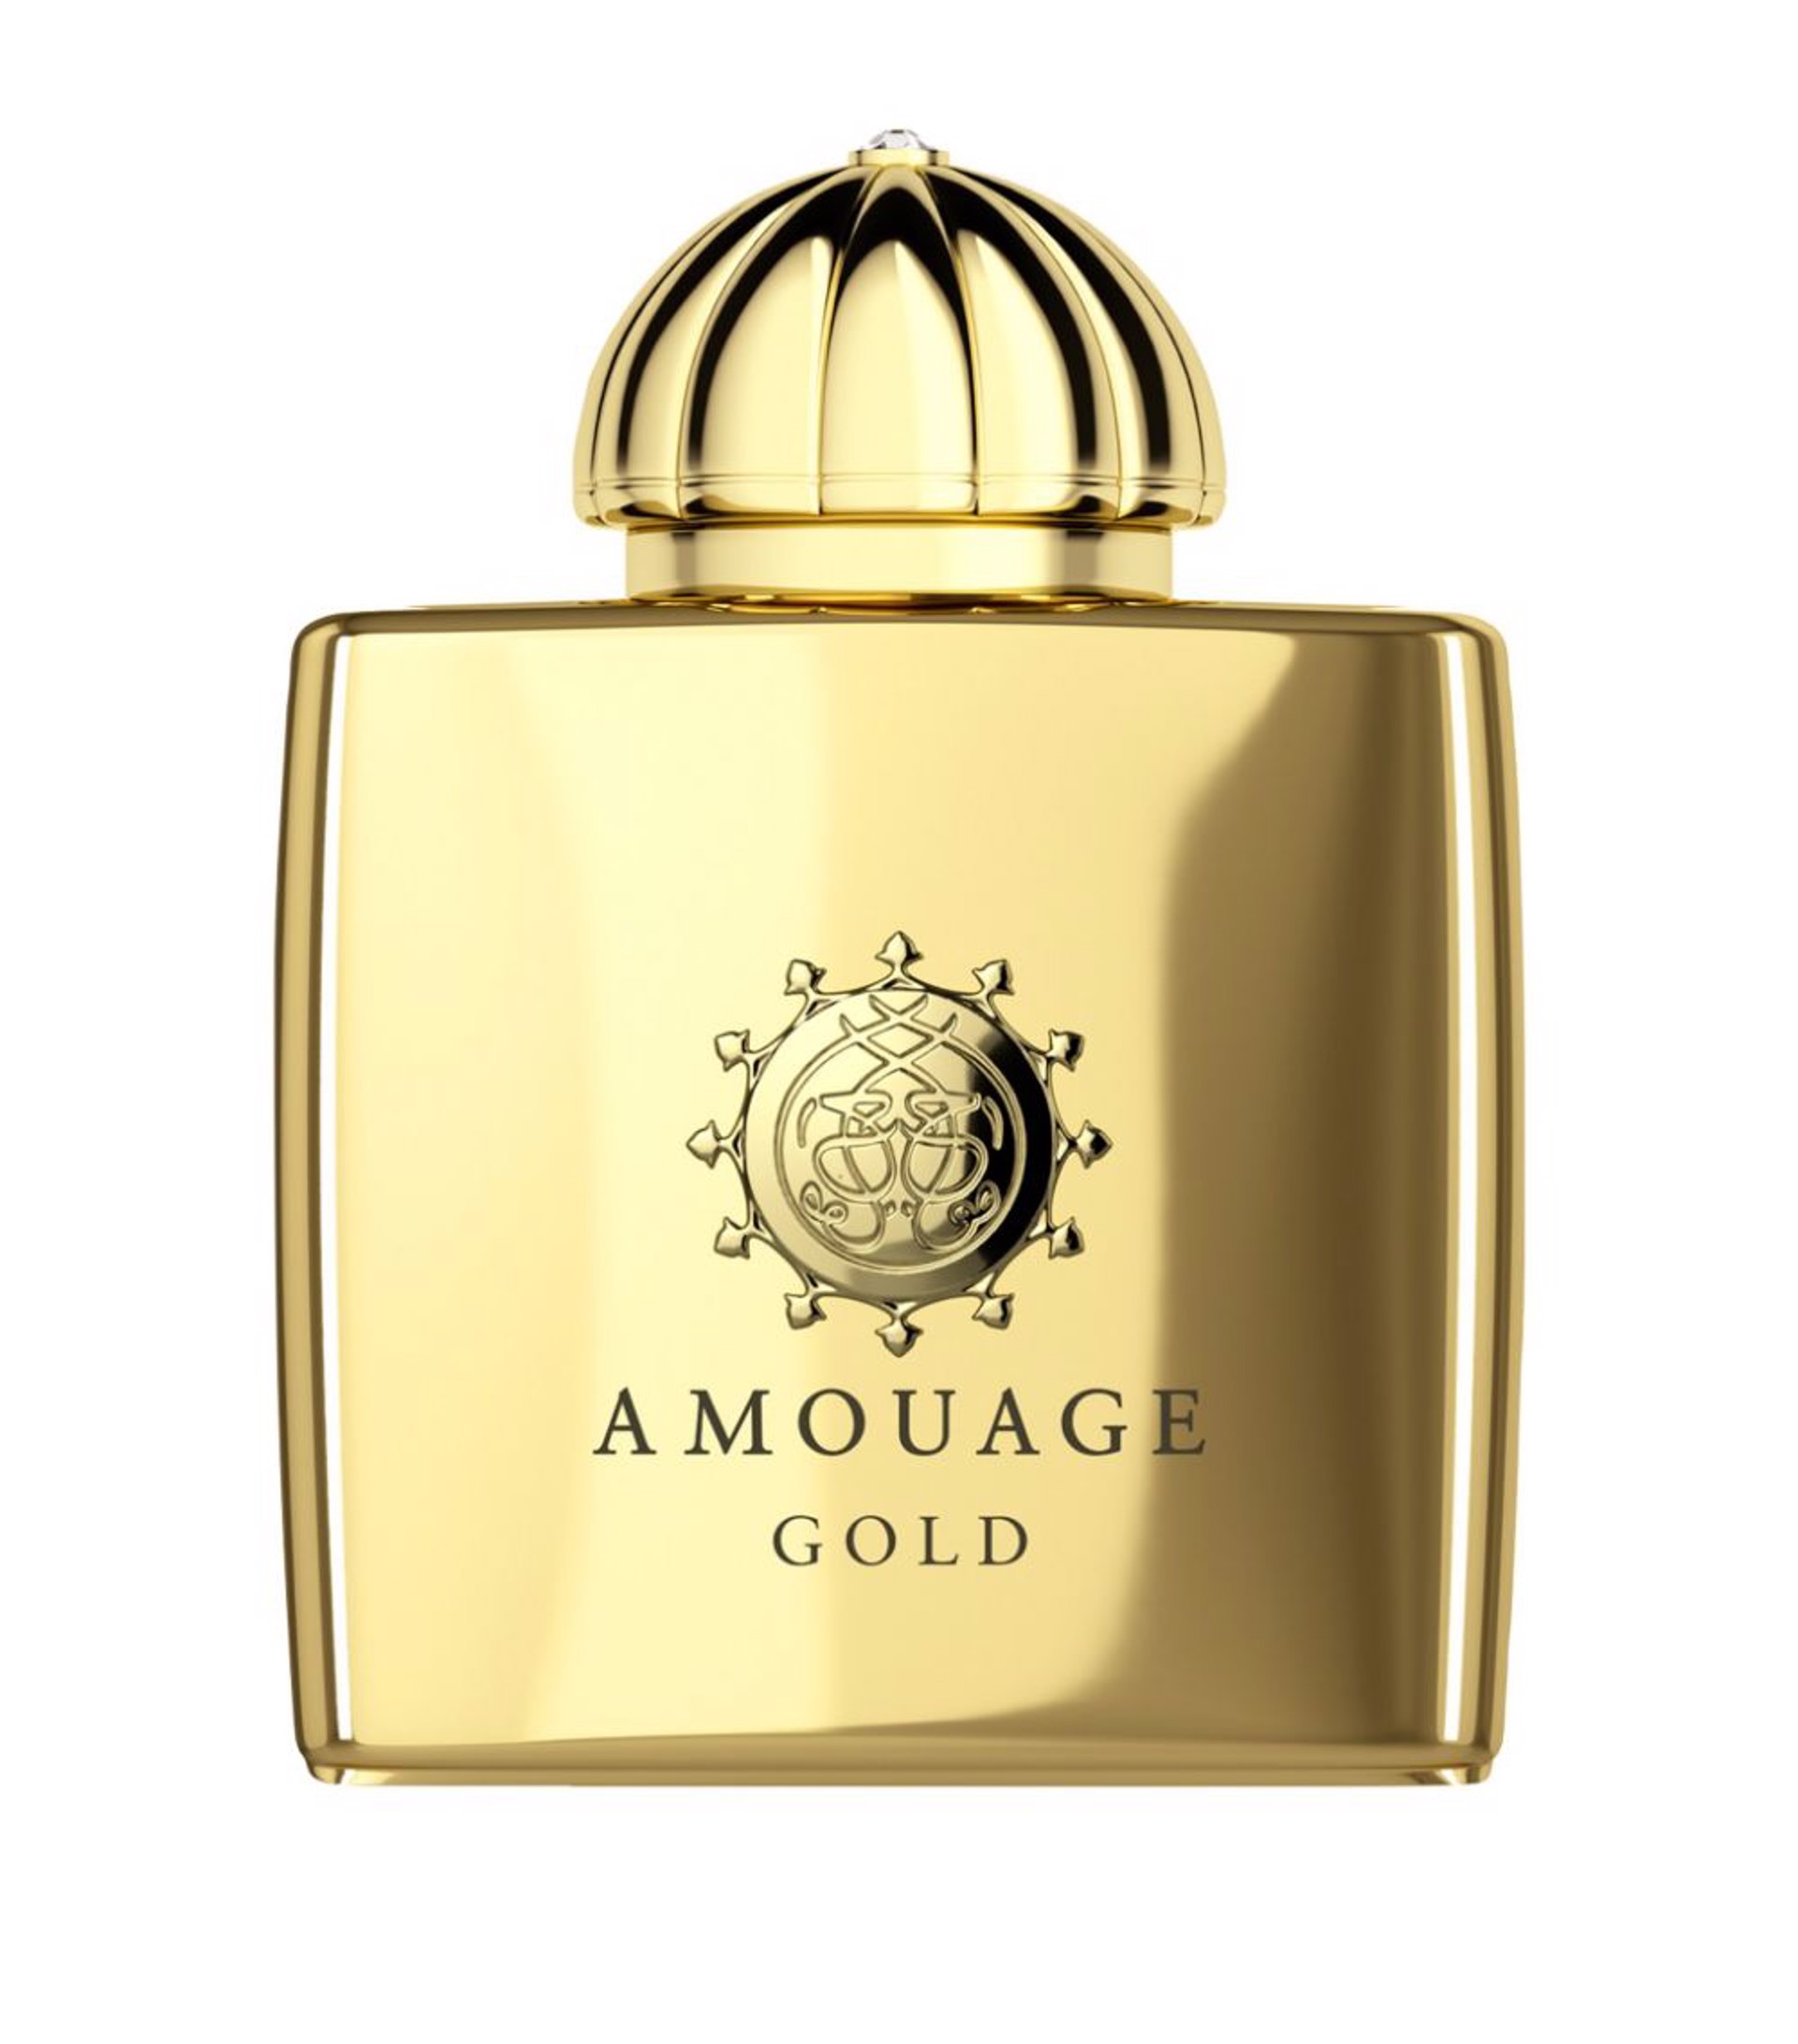 Amouage Gold (W) by J. Catma